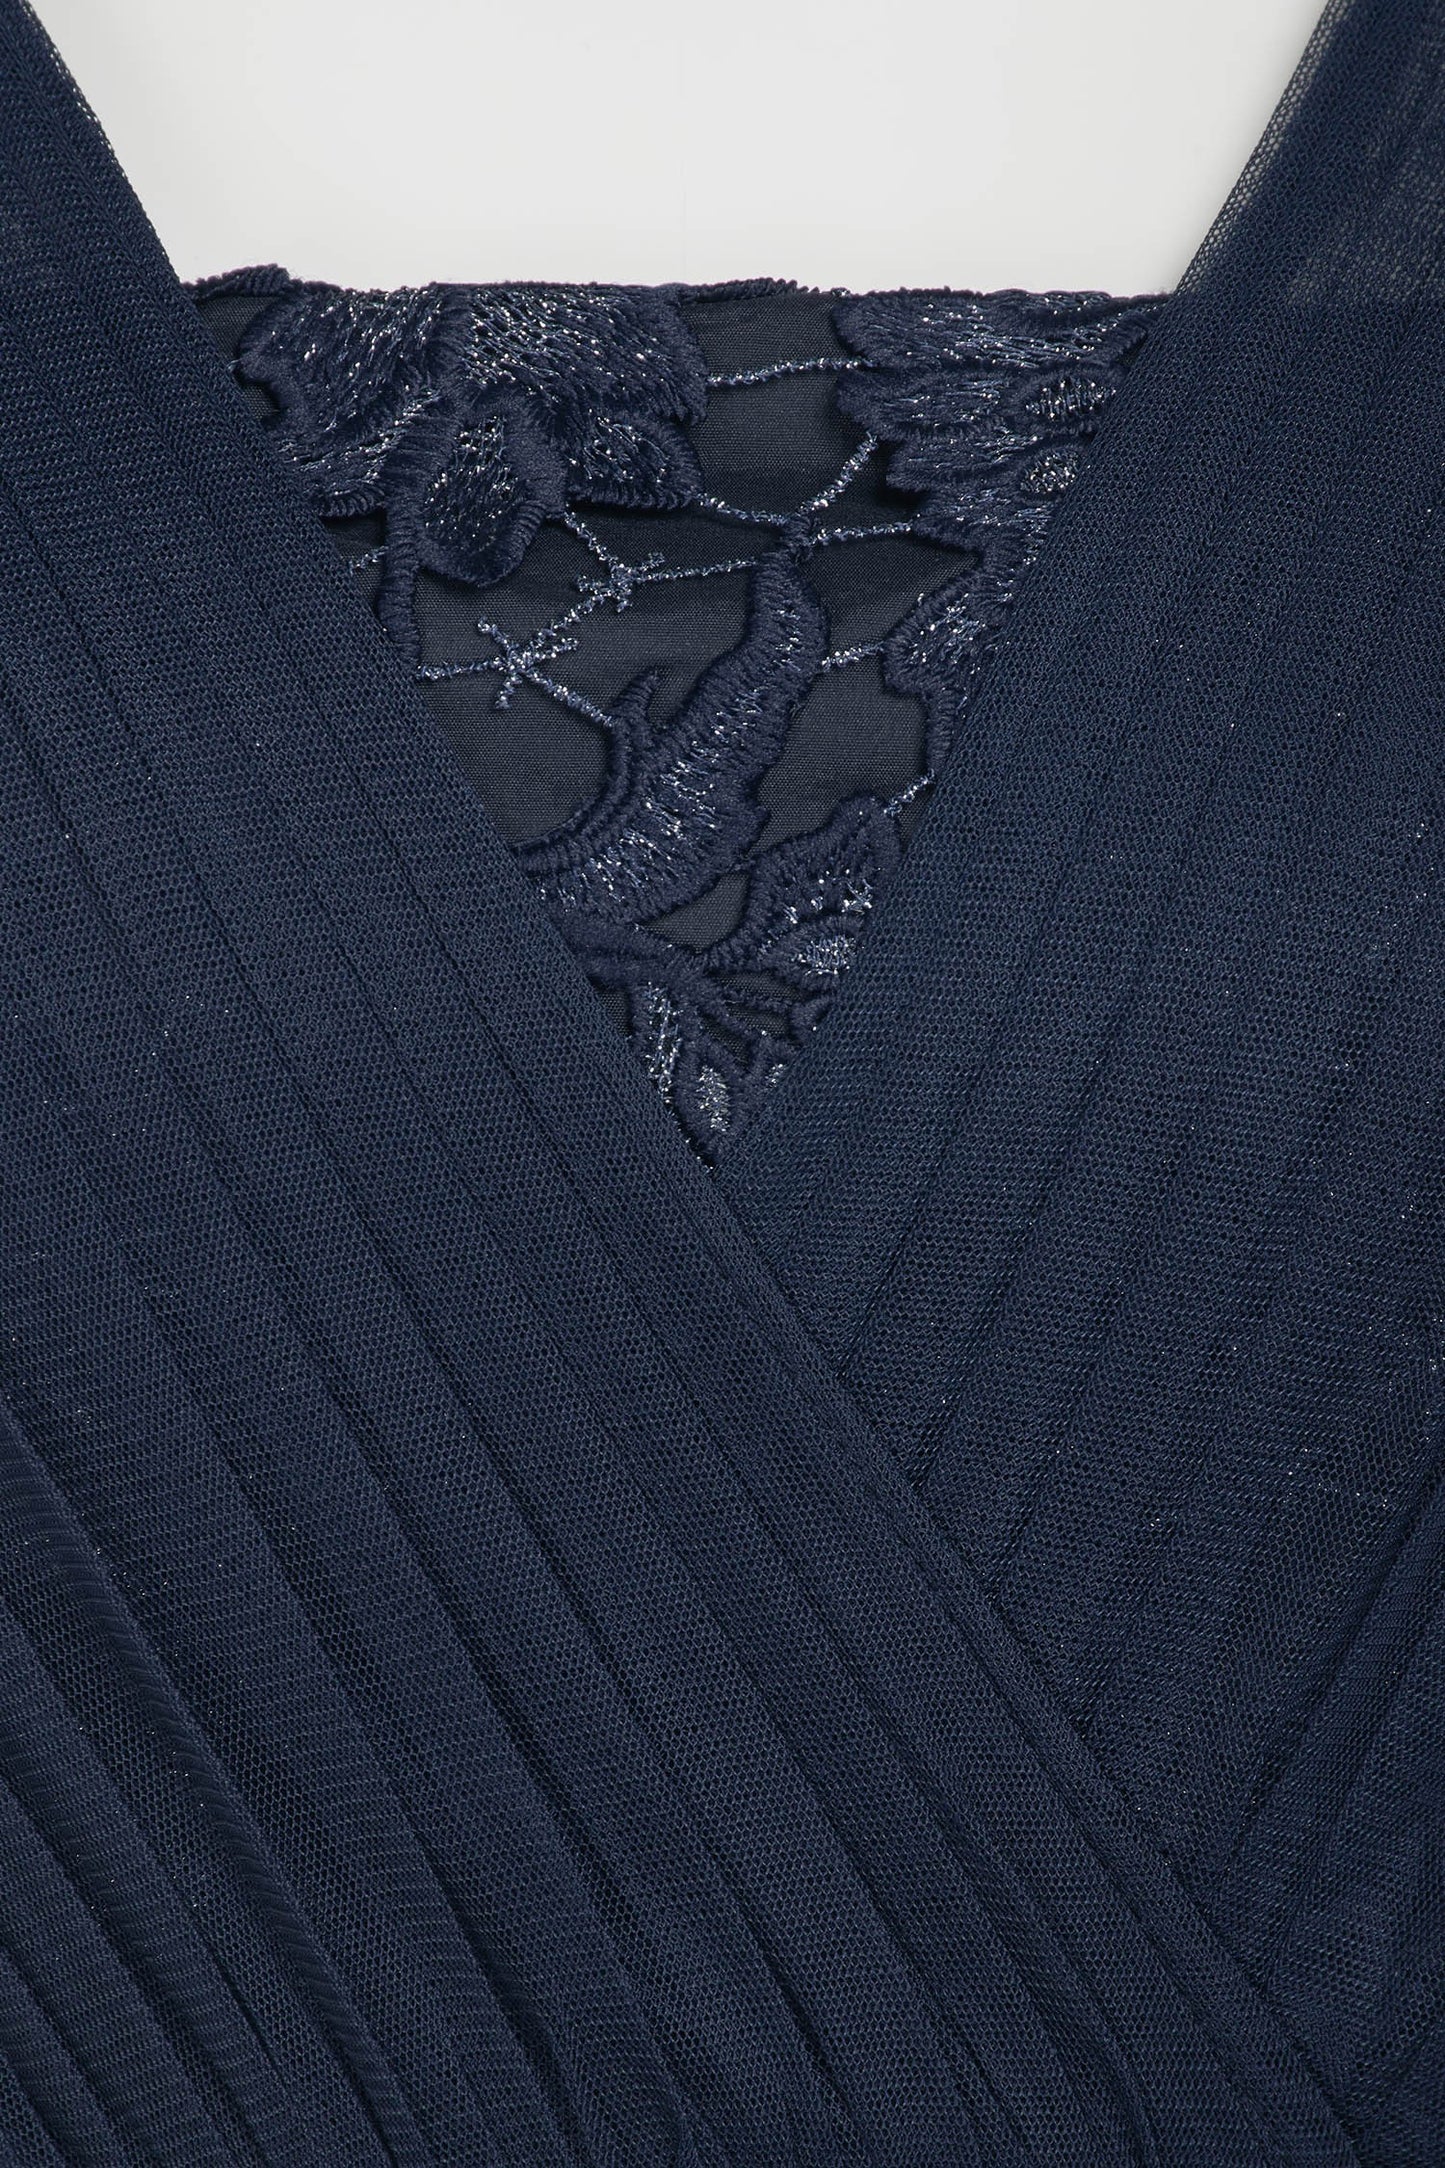 Aidan Mattox Sleeveless Embroidered Mesh Dress